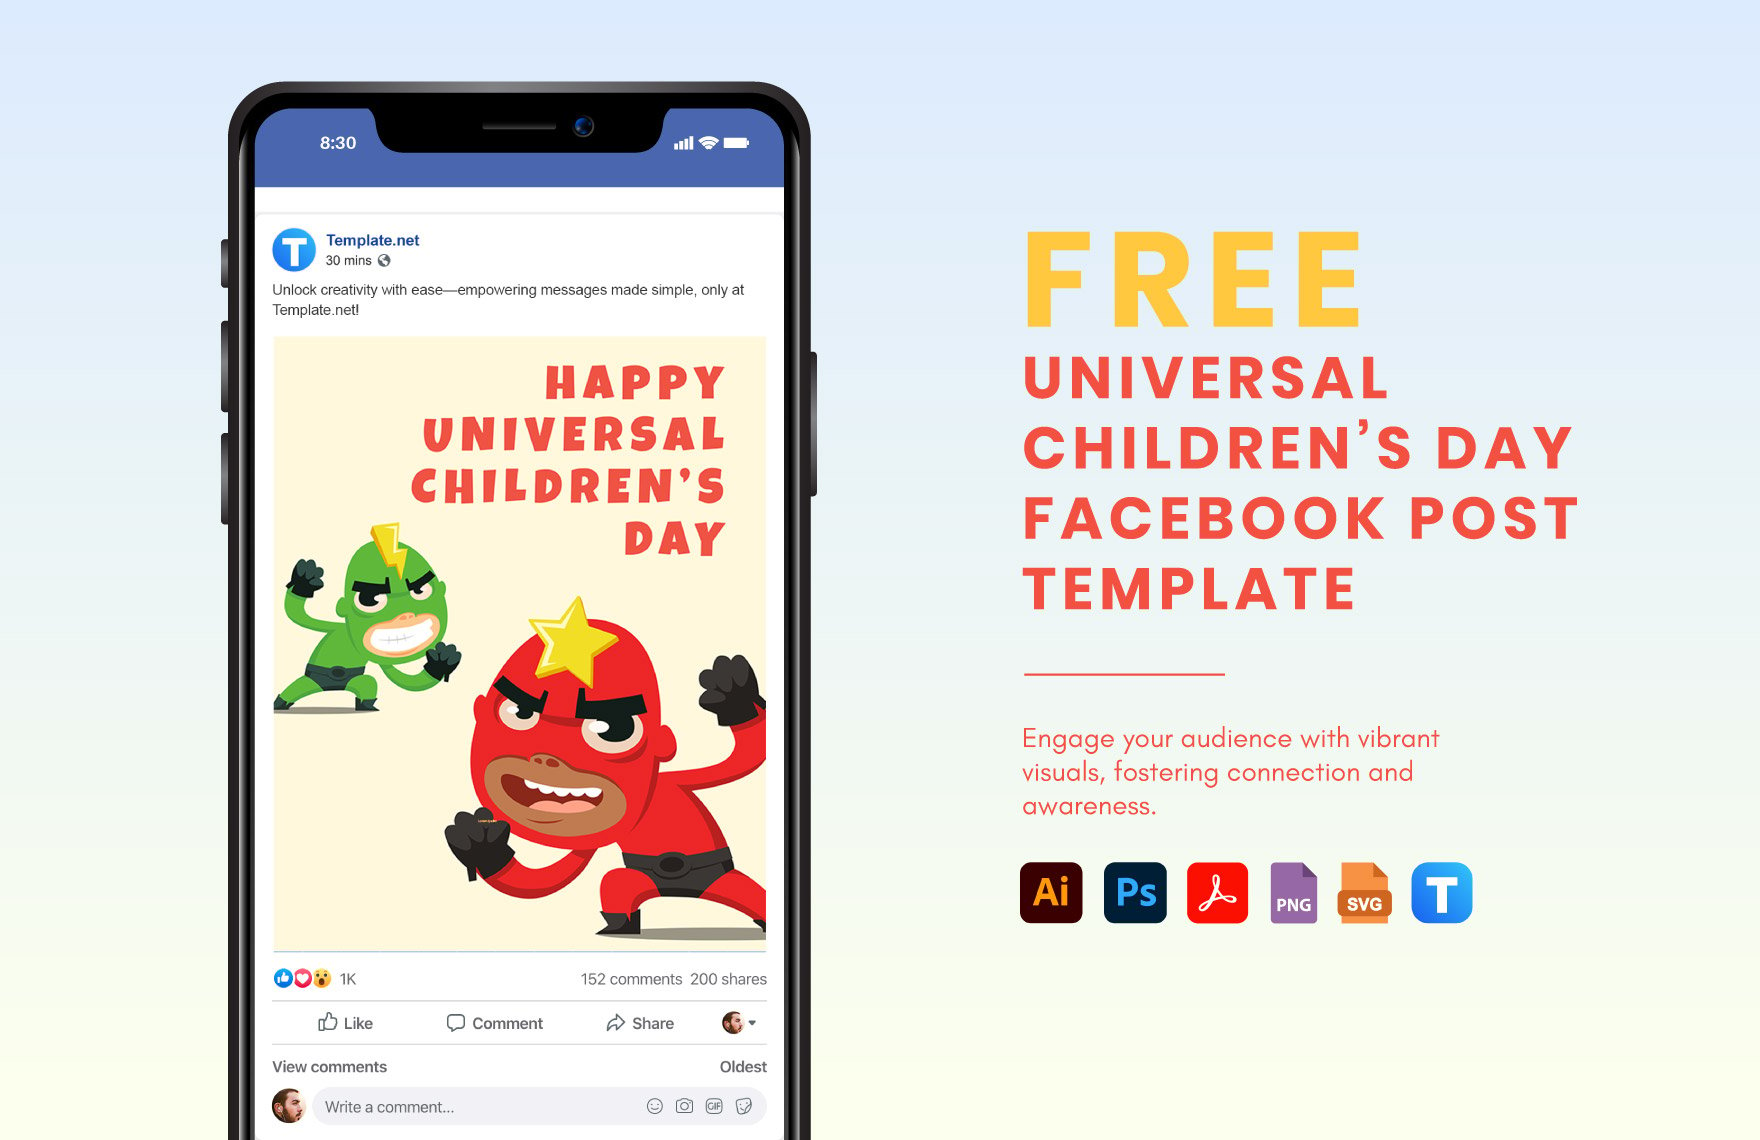 Universal Children’s Day Facebook Post Template